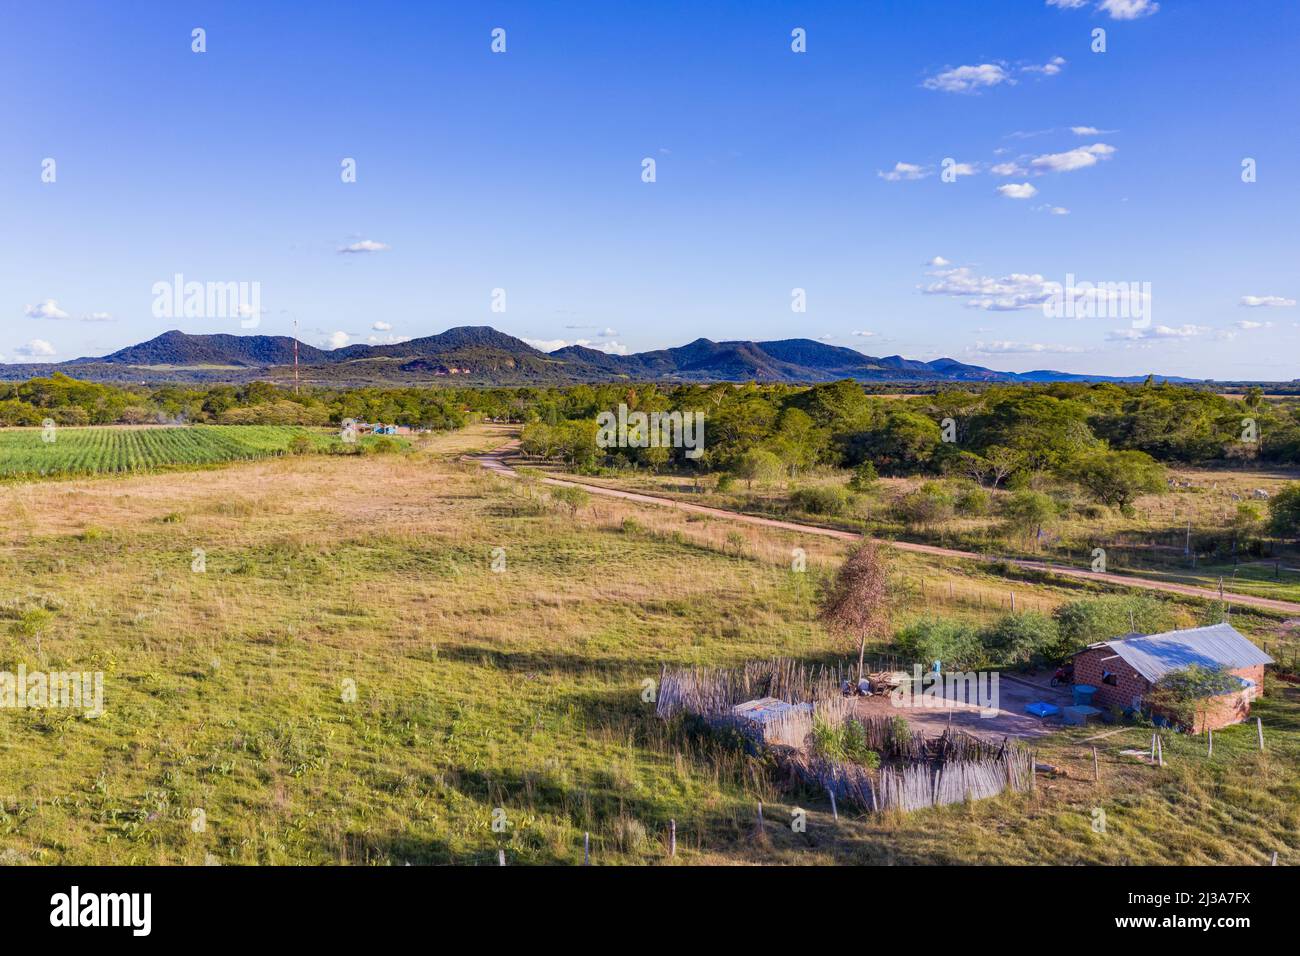 Poor rural area in Paraguay overlooking the Ybytyruzu Mountains Stock Photo